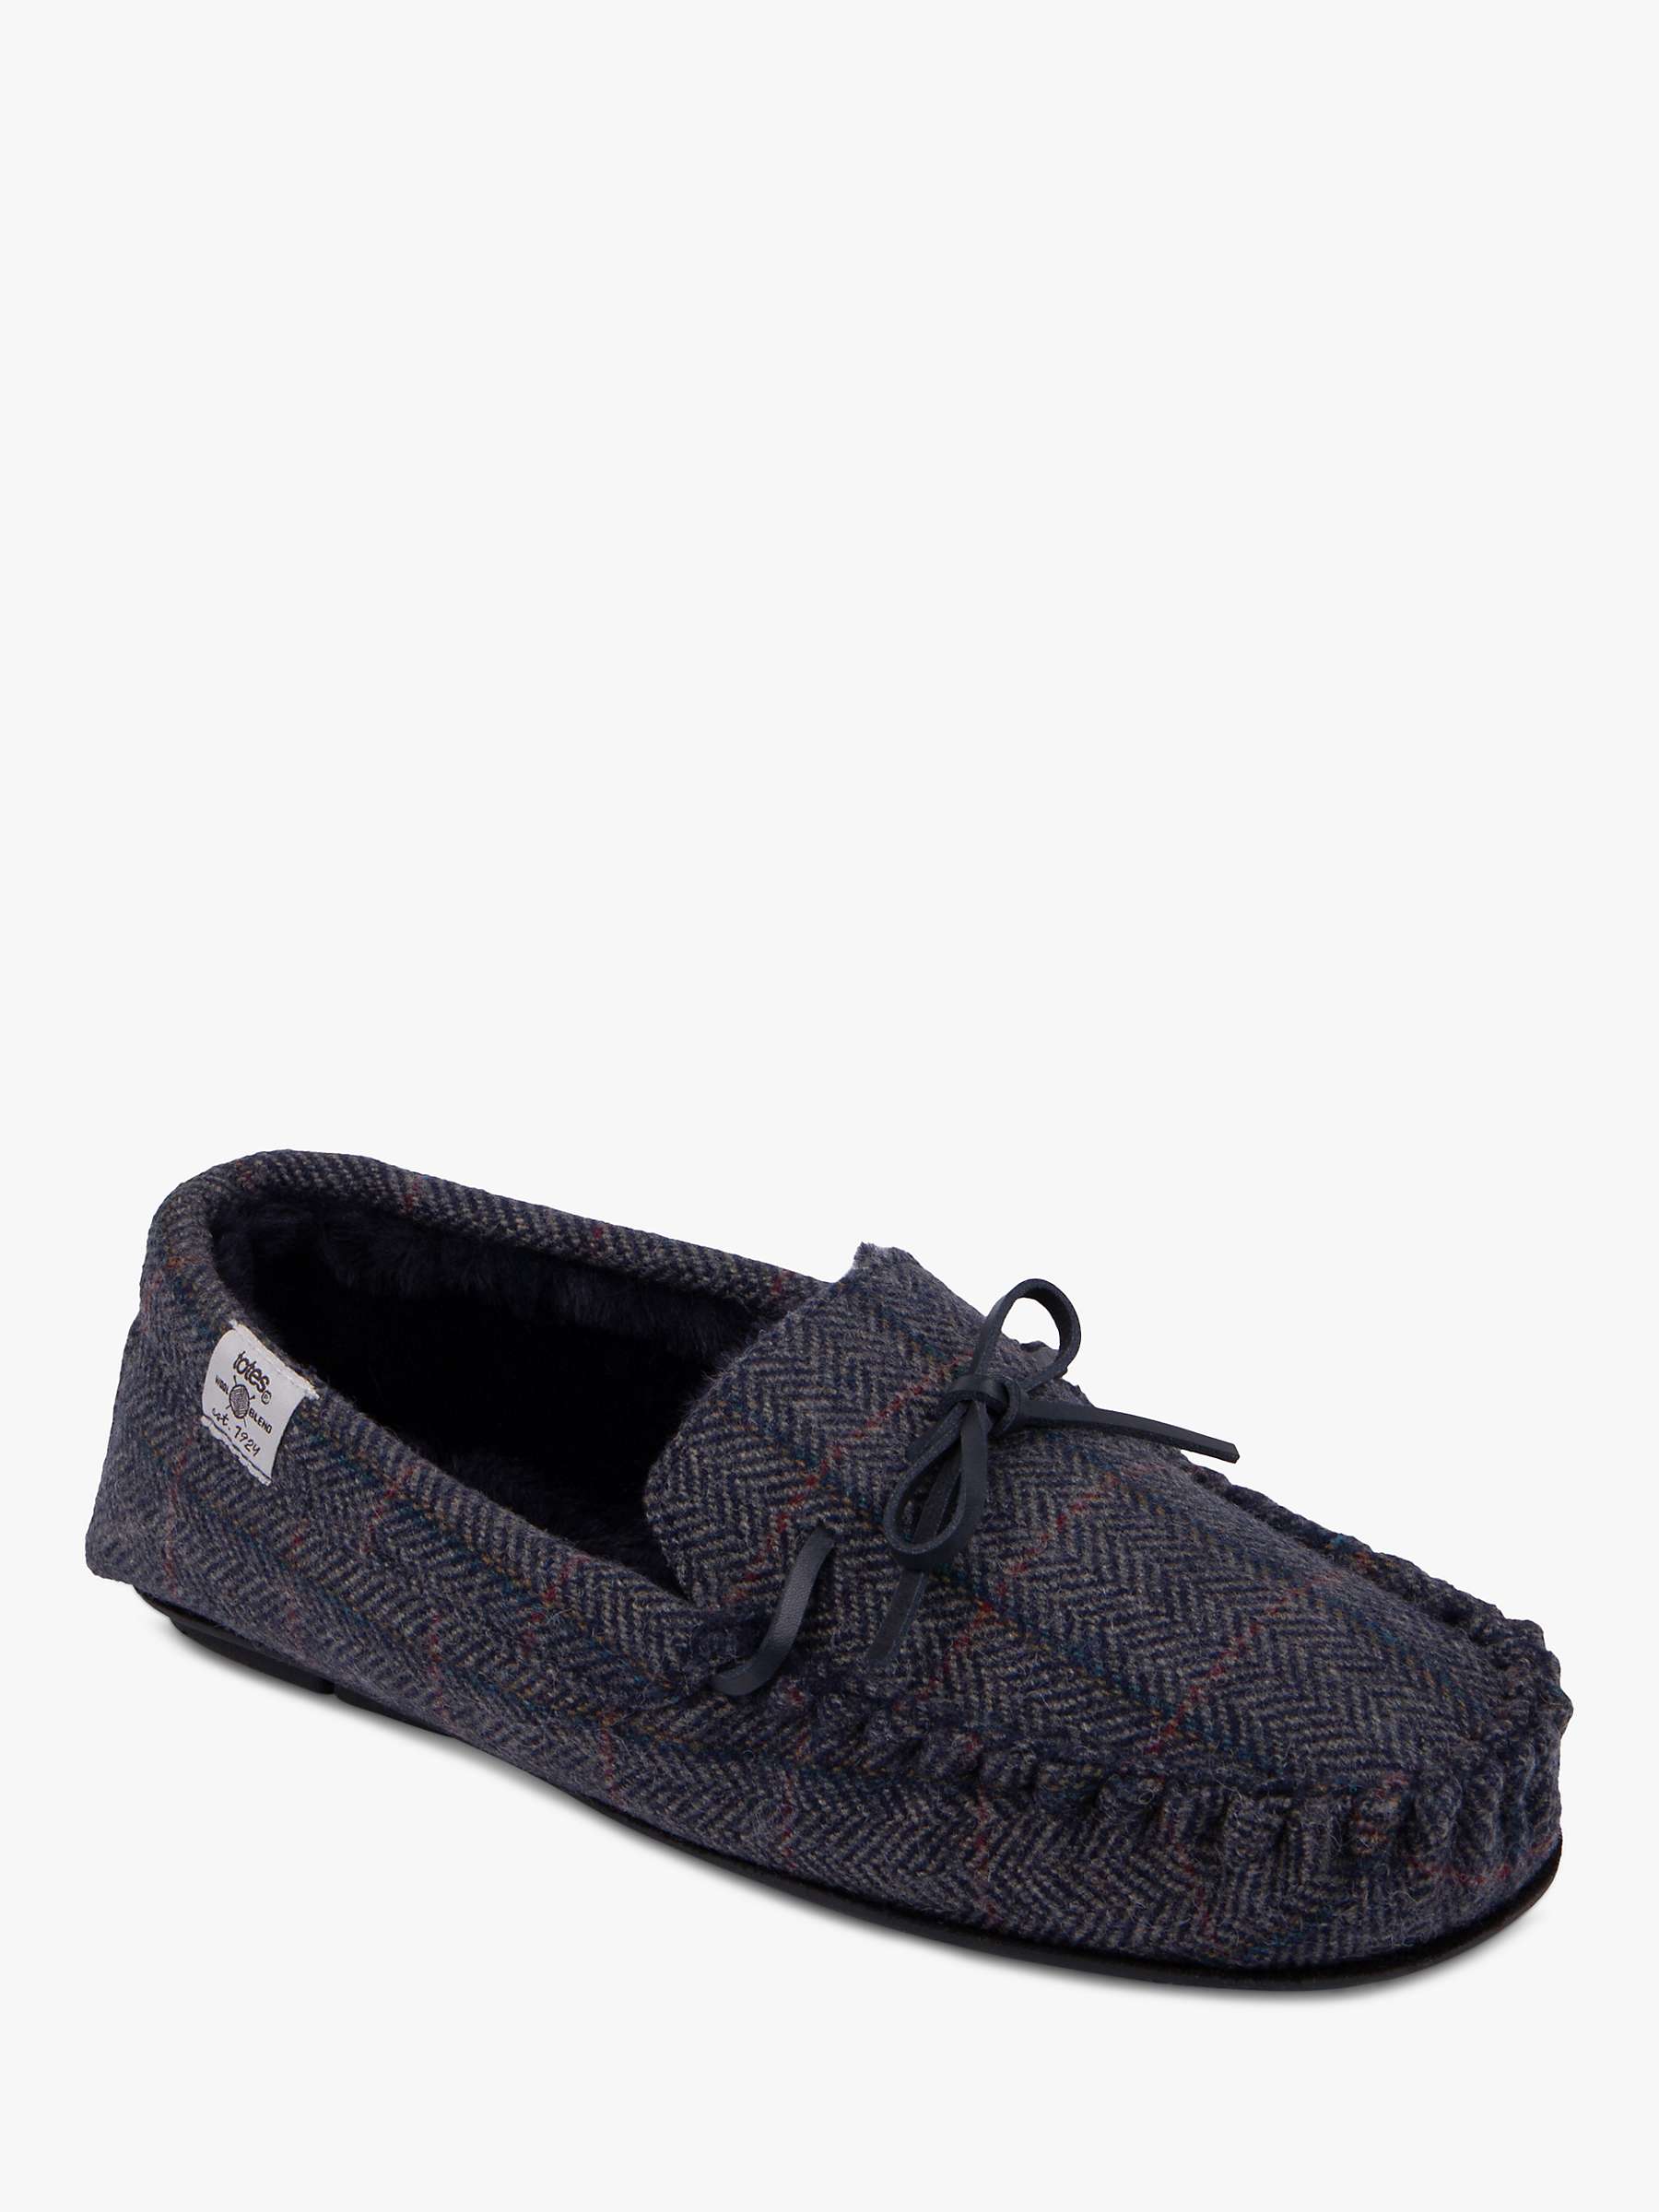 Buy totes Herringbone Moccasin Style Wool Blend Slippers, Navy/Multi Online at johnlewis.com